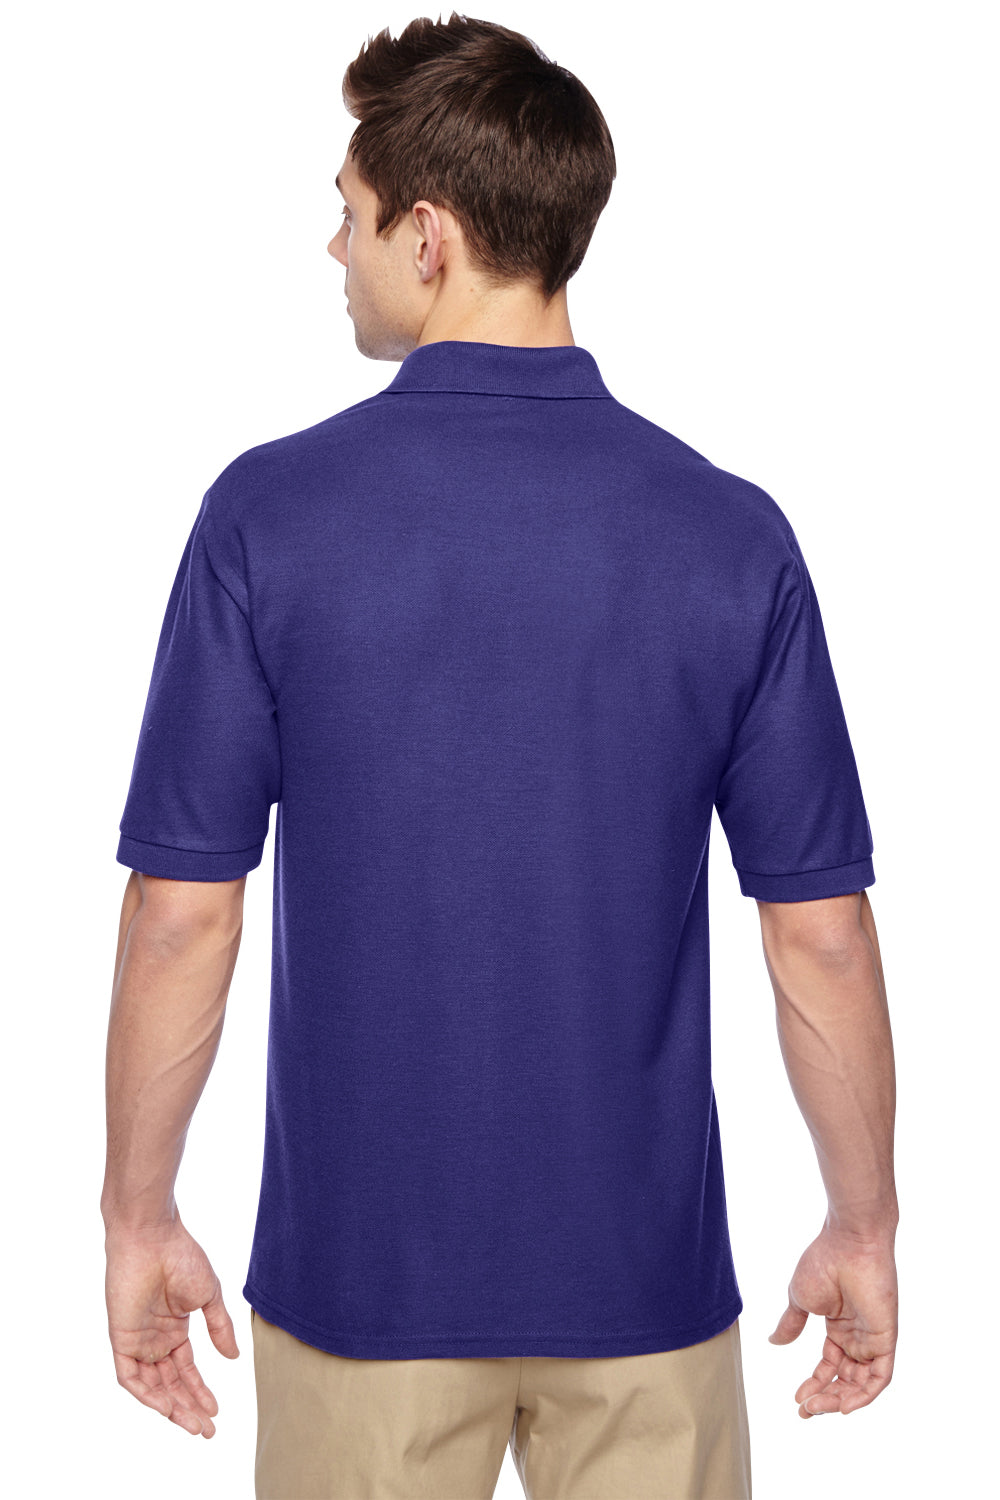 Jerzees 537MSR Mens Easy Care Moisture Wicking Short Sleeve Polo Shirt Purple Back